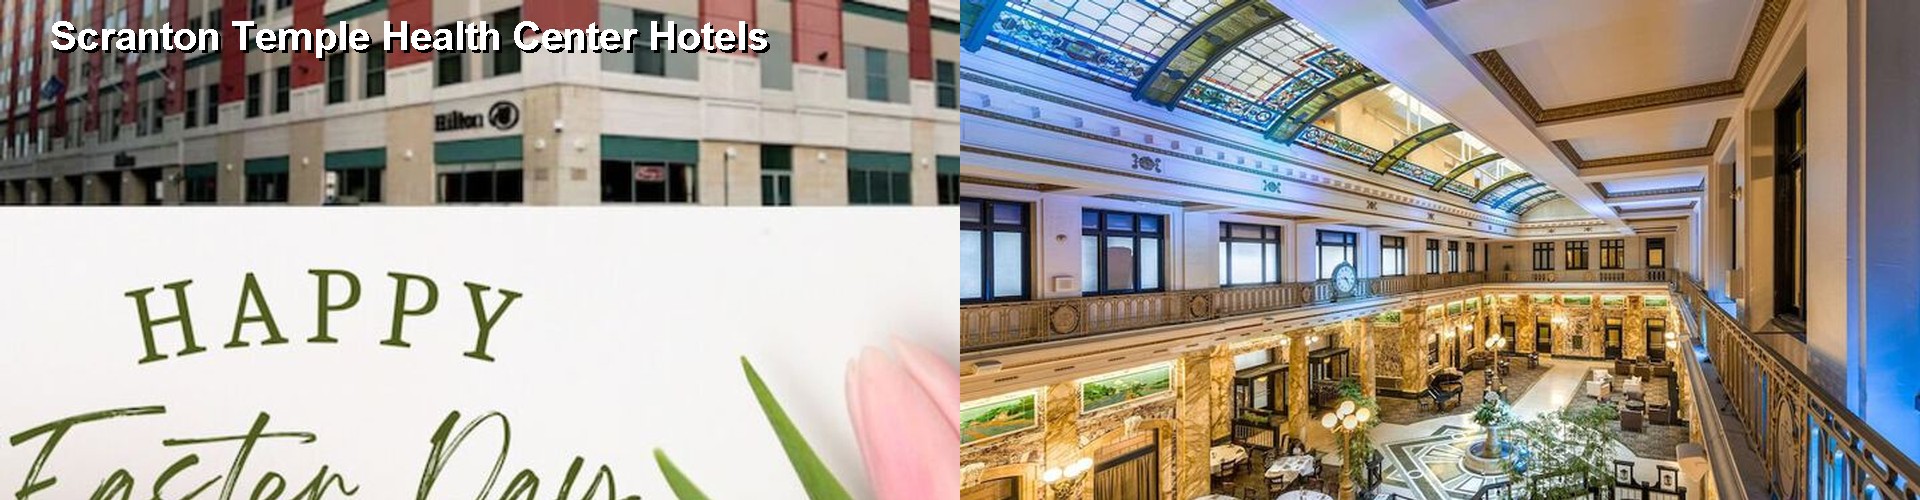 4 Best Hotels near Scranton Temple Health Center